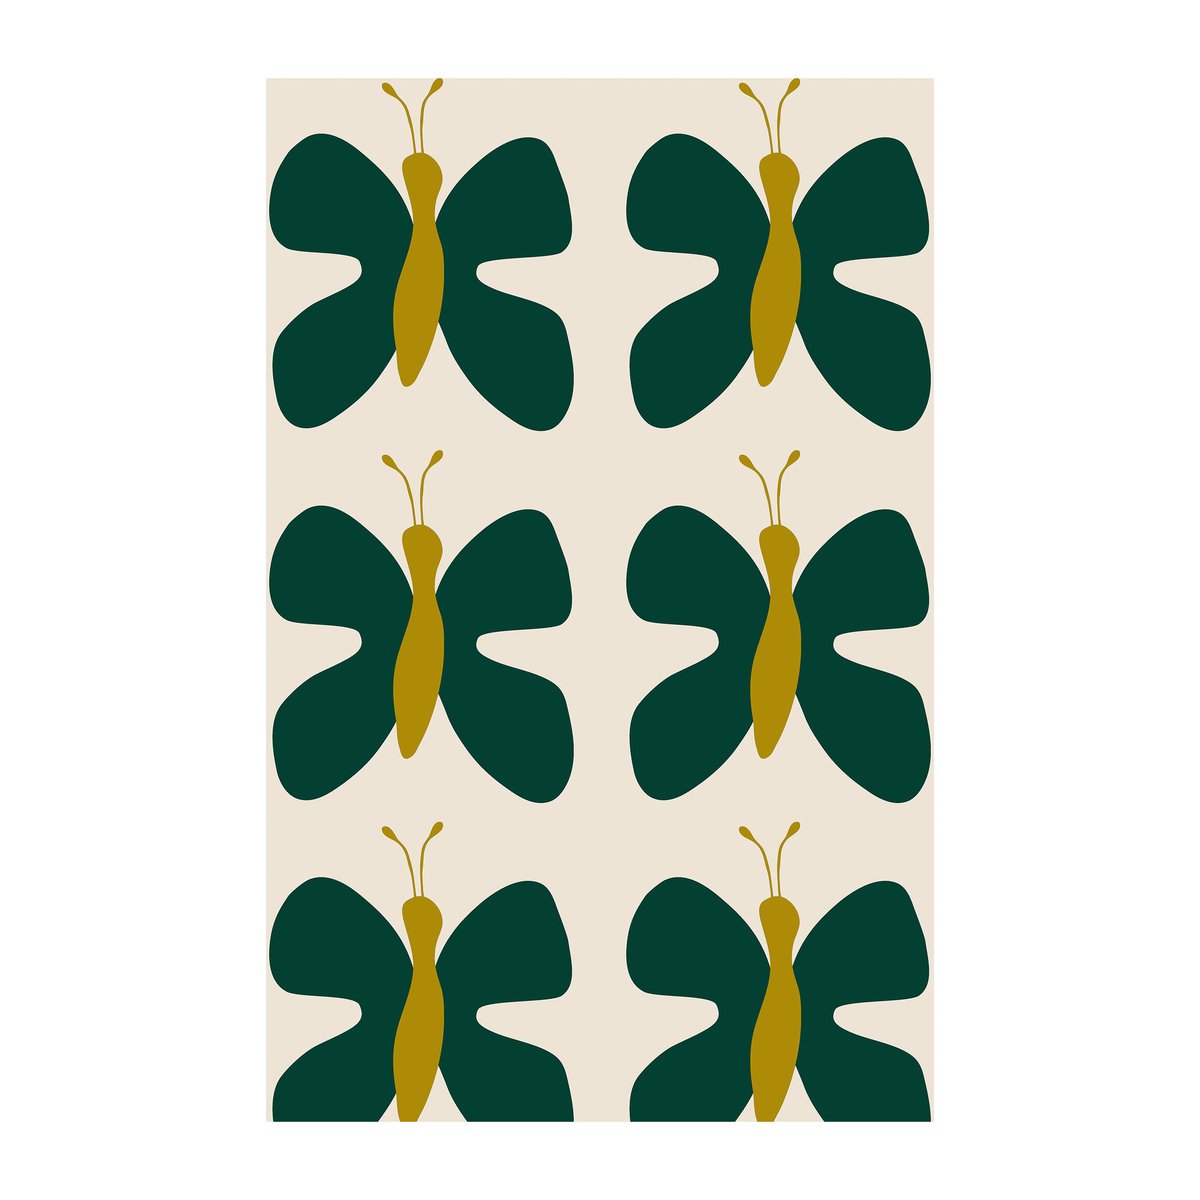 Arvidssons Textil Fjäril kangas Vihreä-keltainen